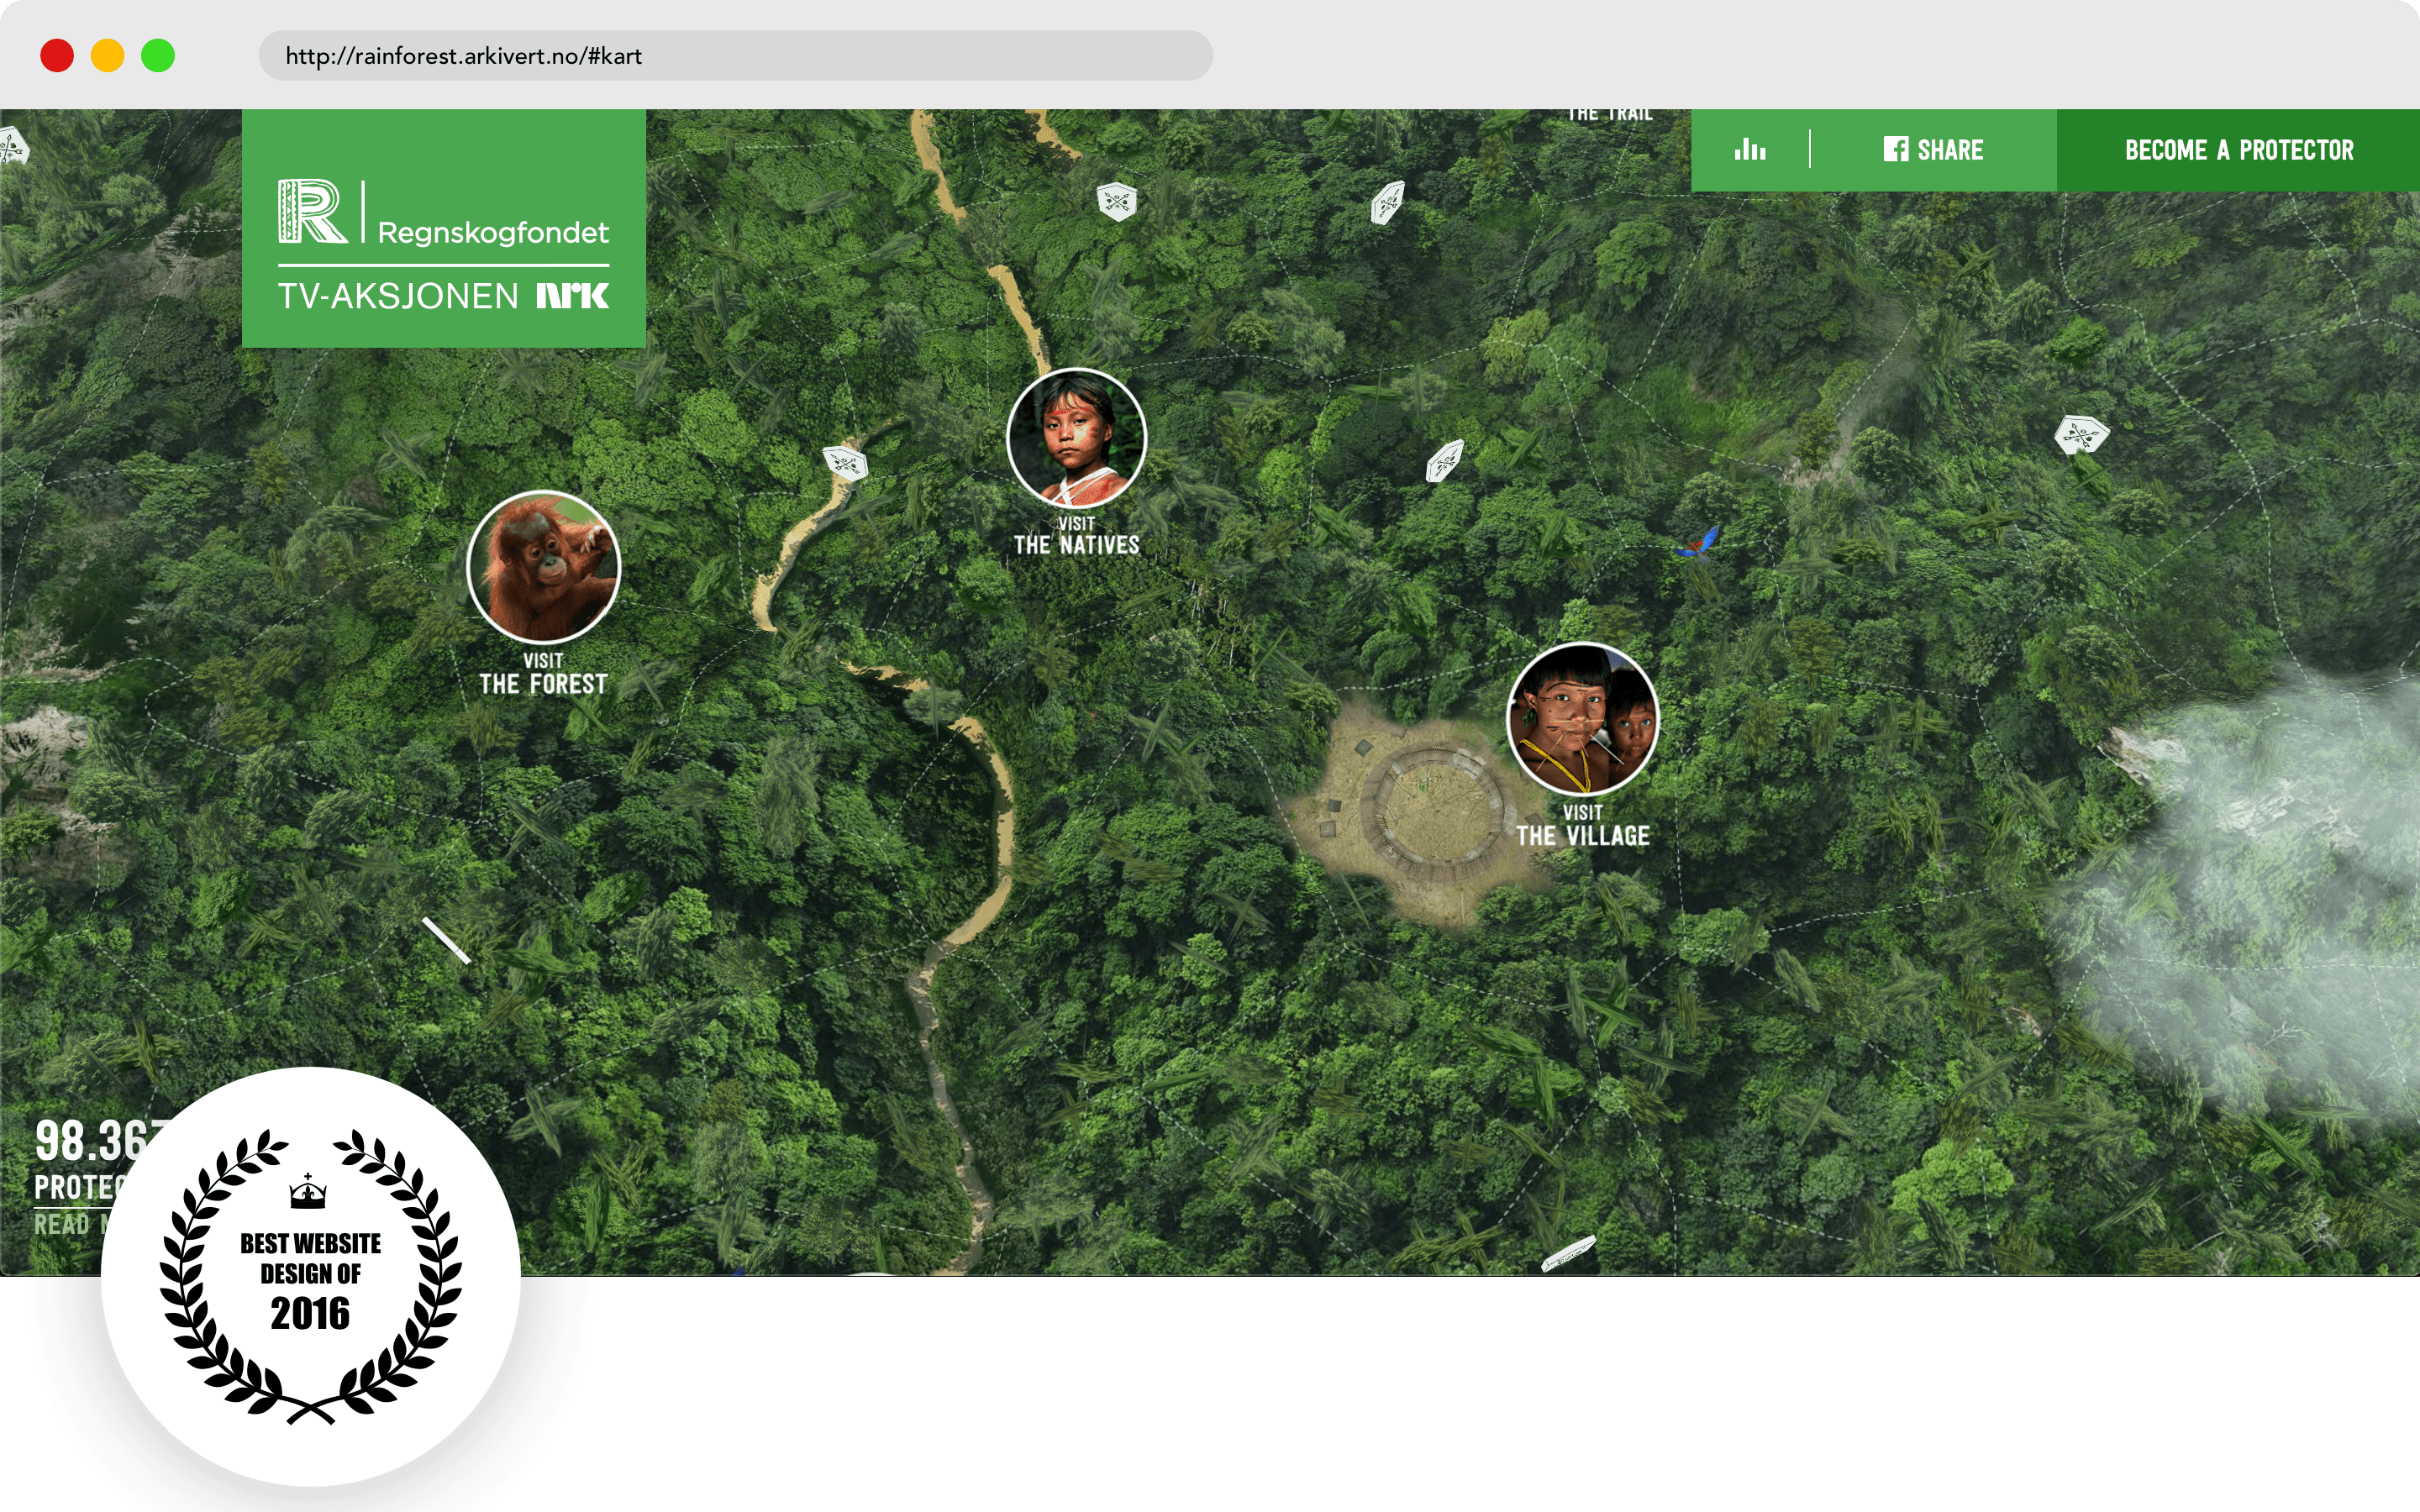 Best Website Rainforest Arkivert